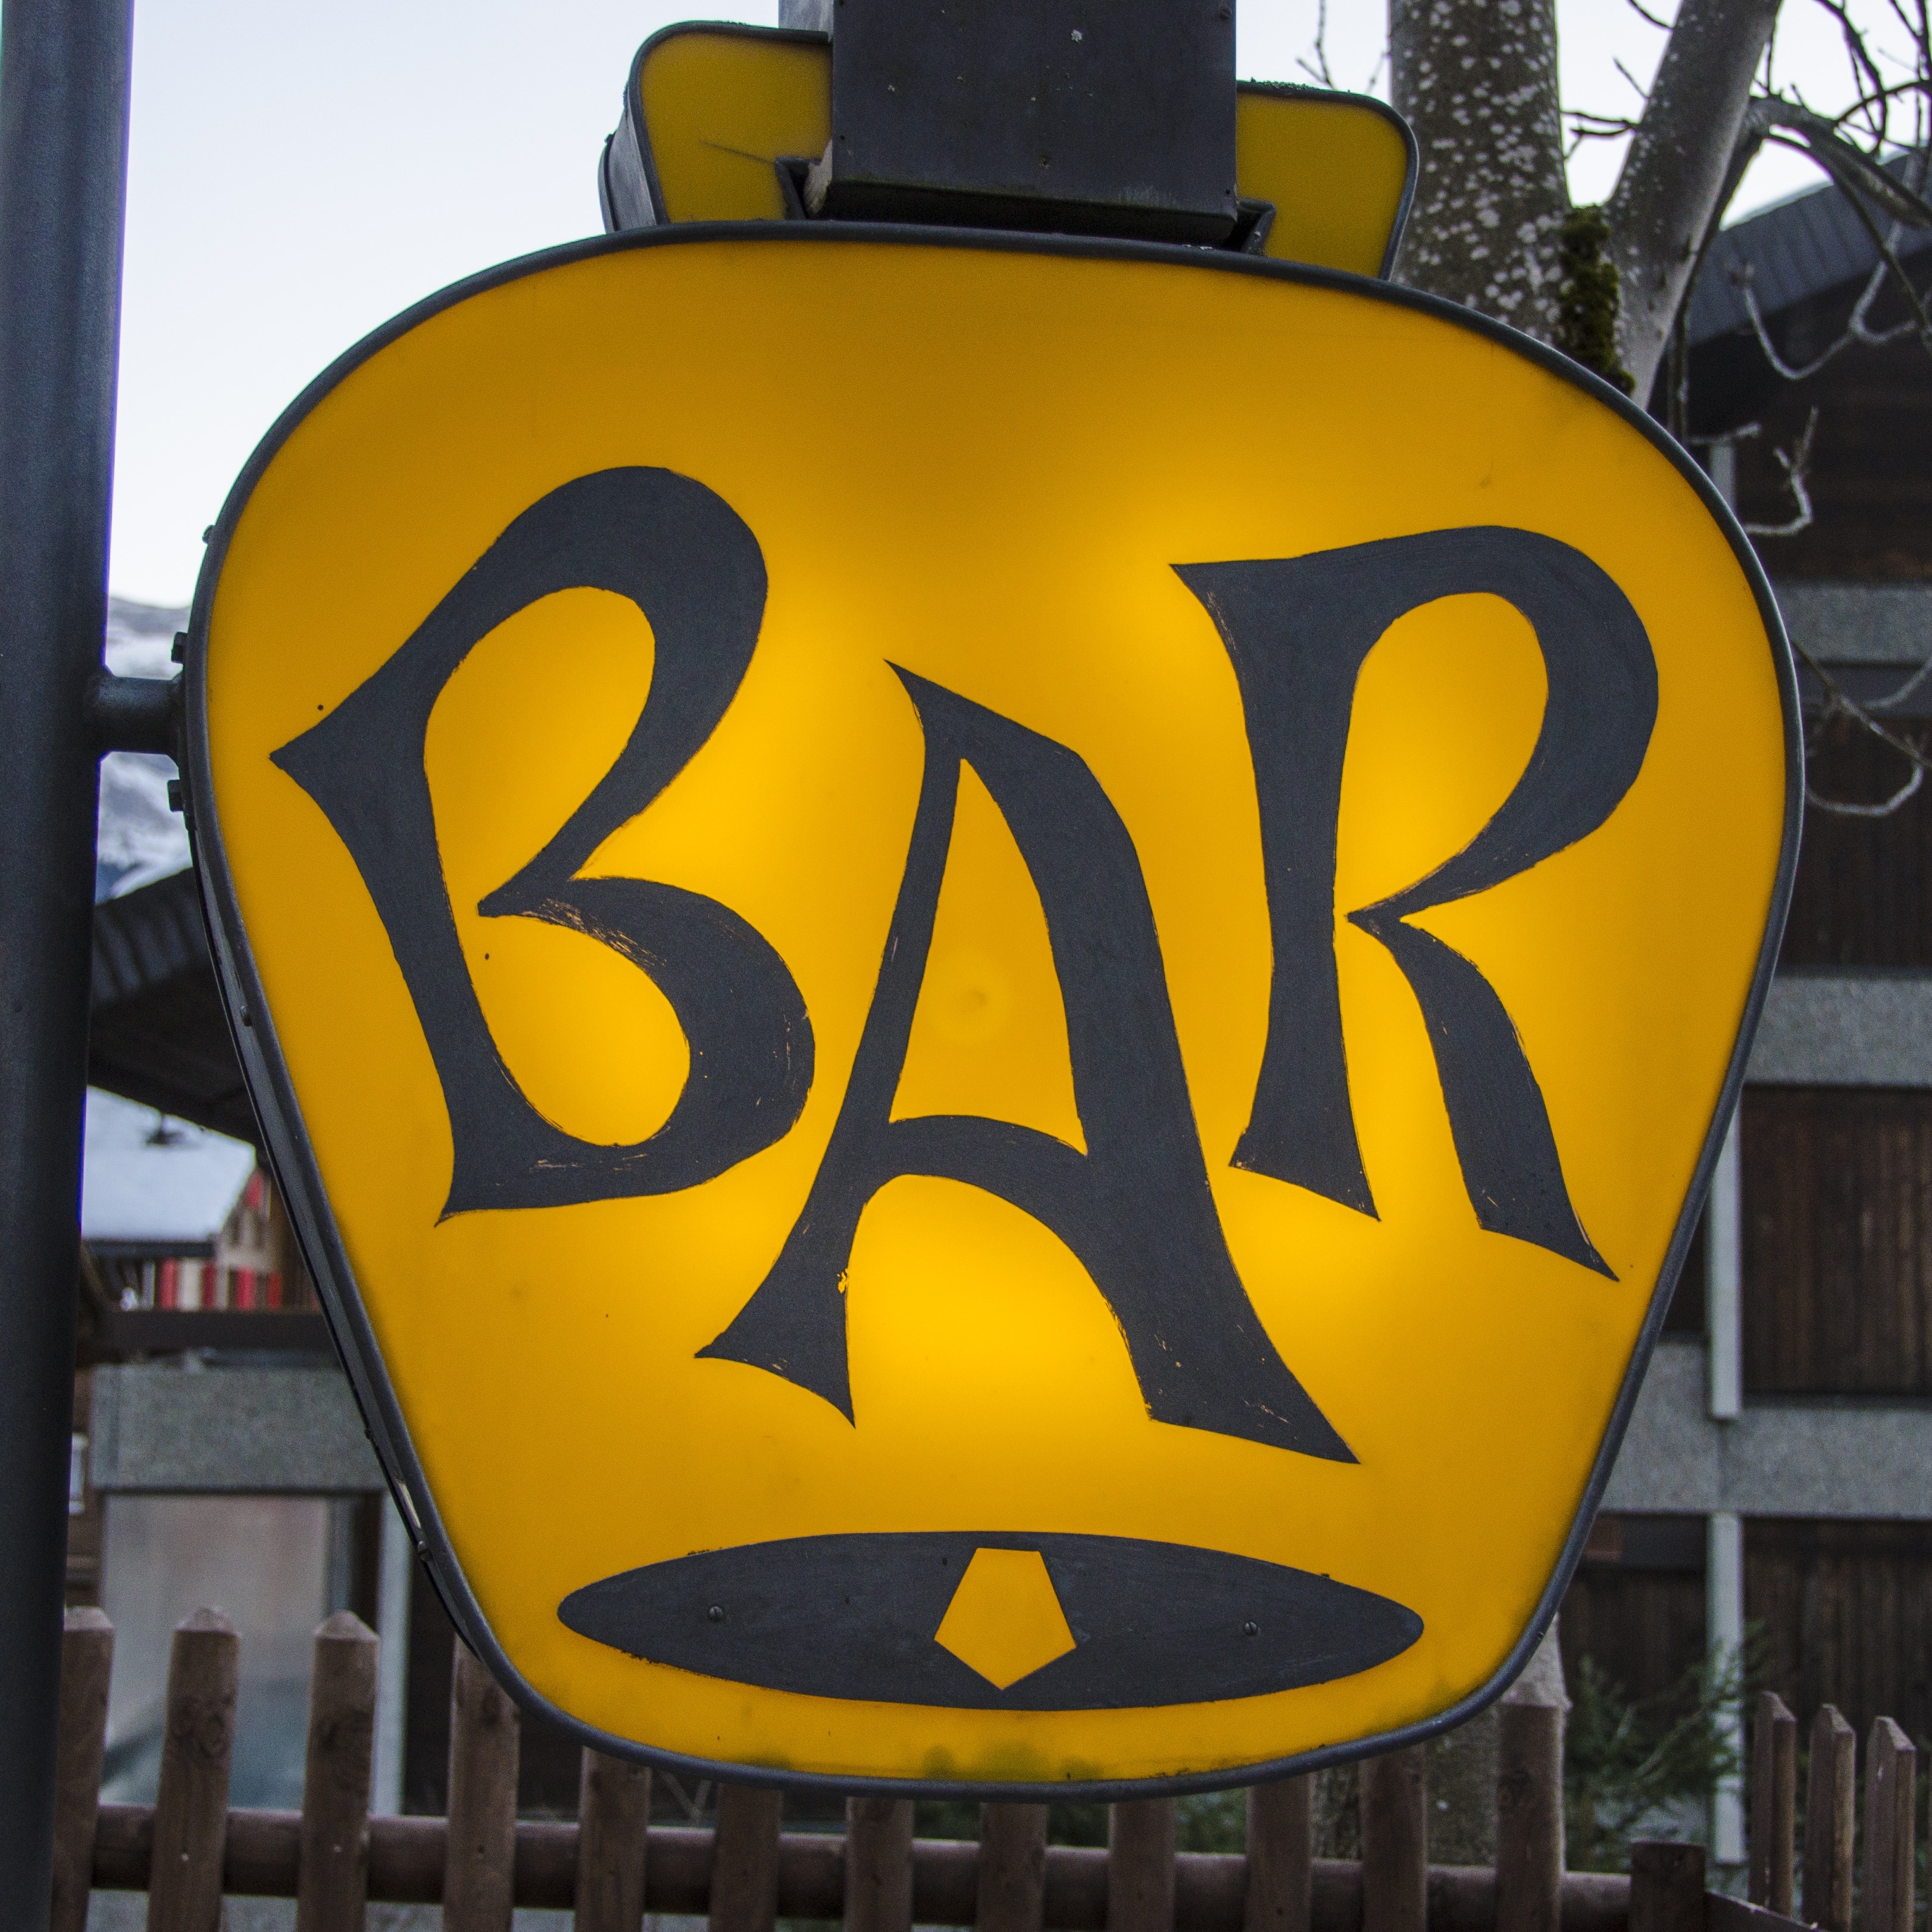 yellow and black bar signage